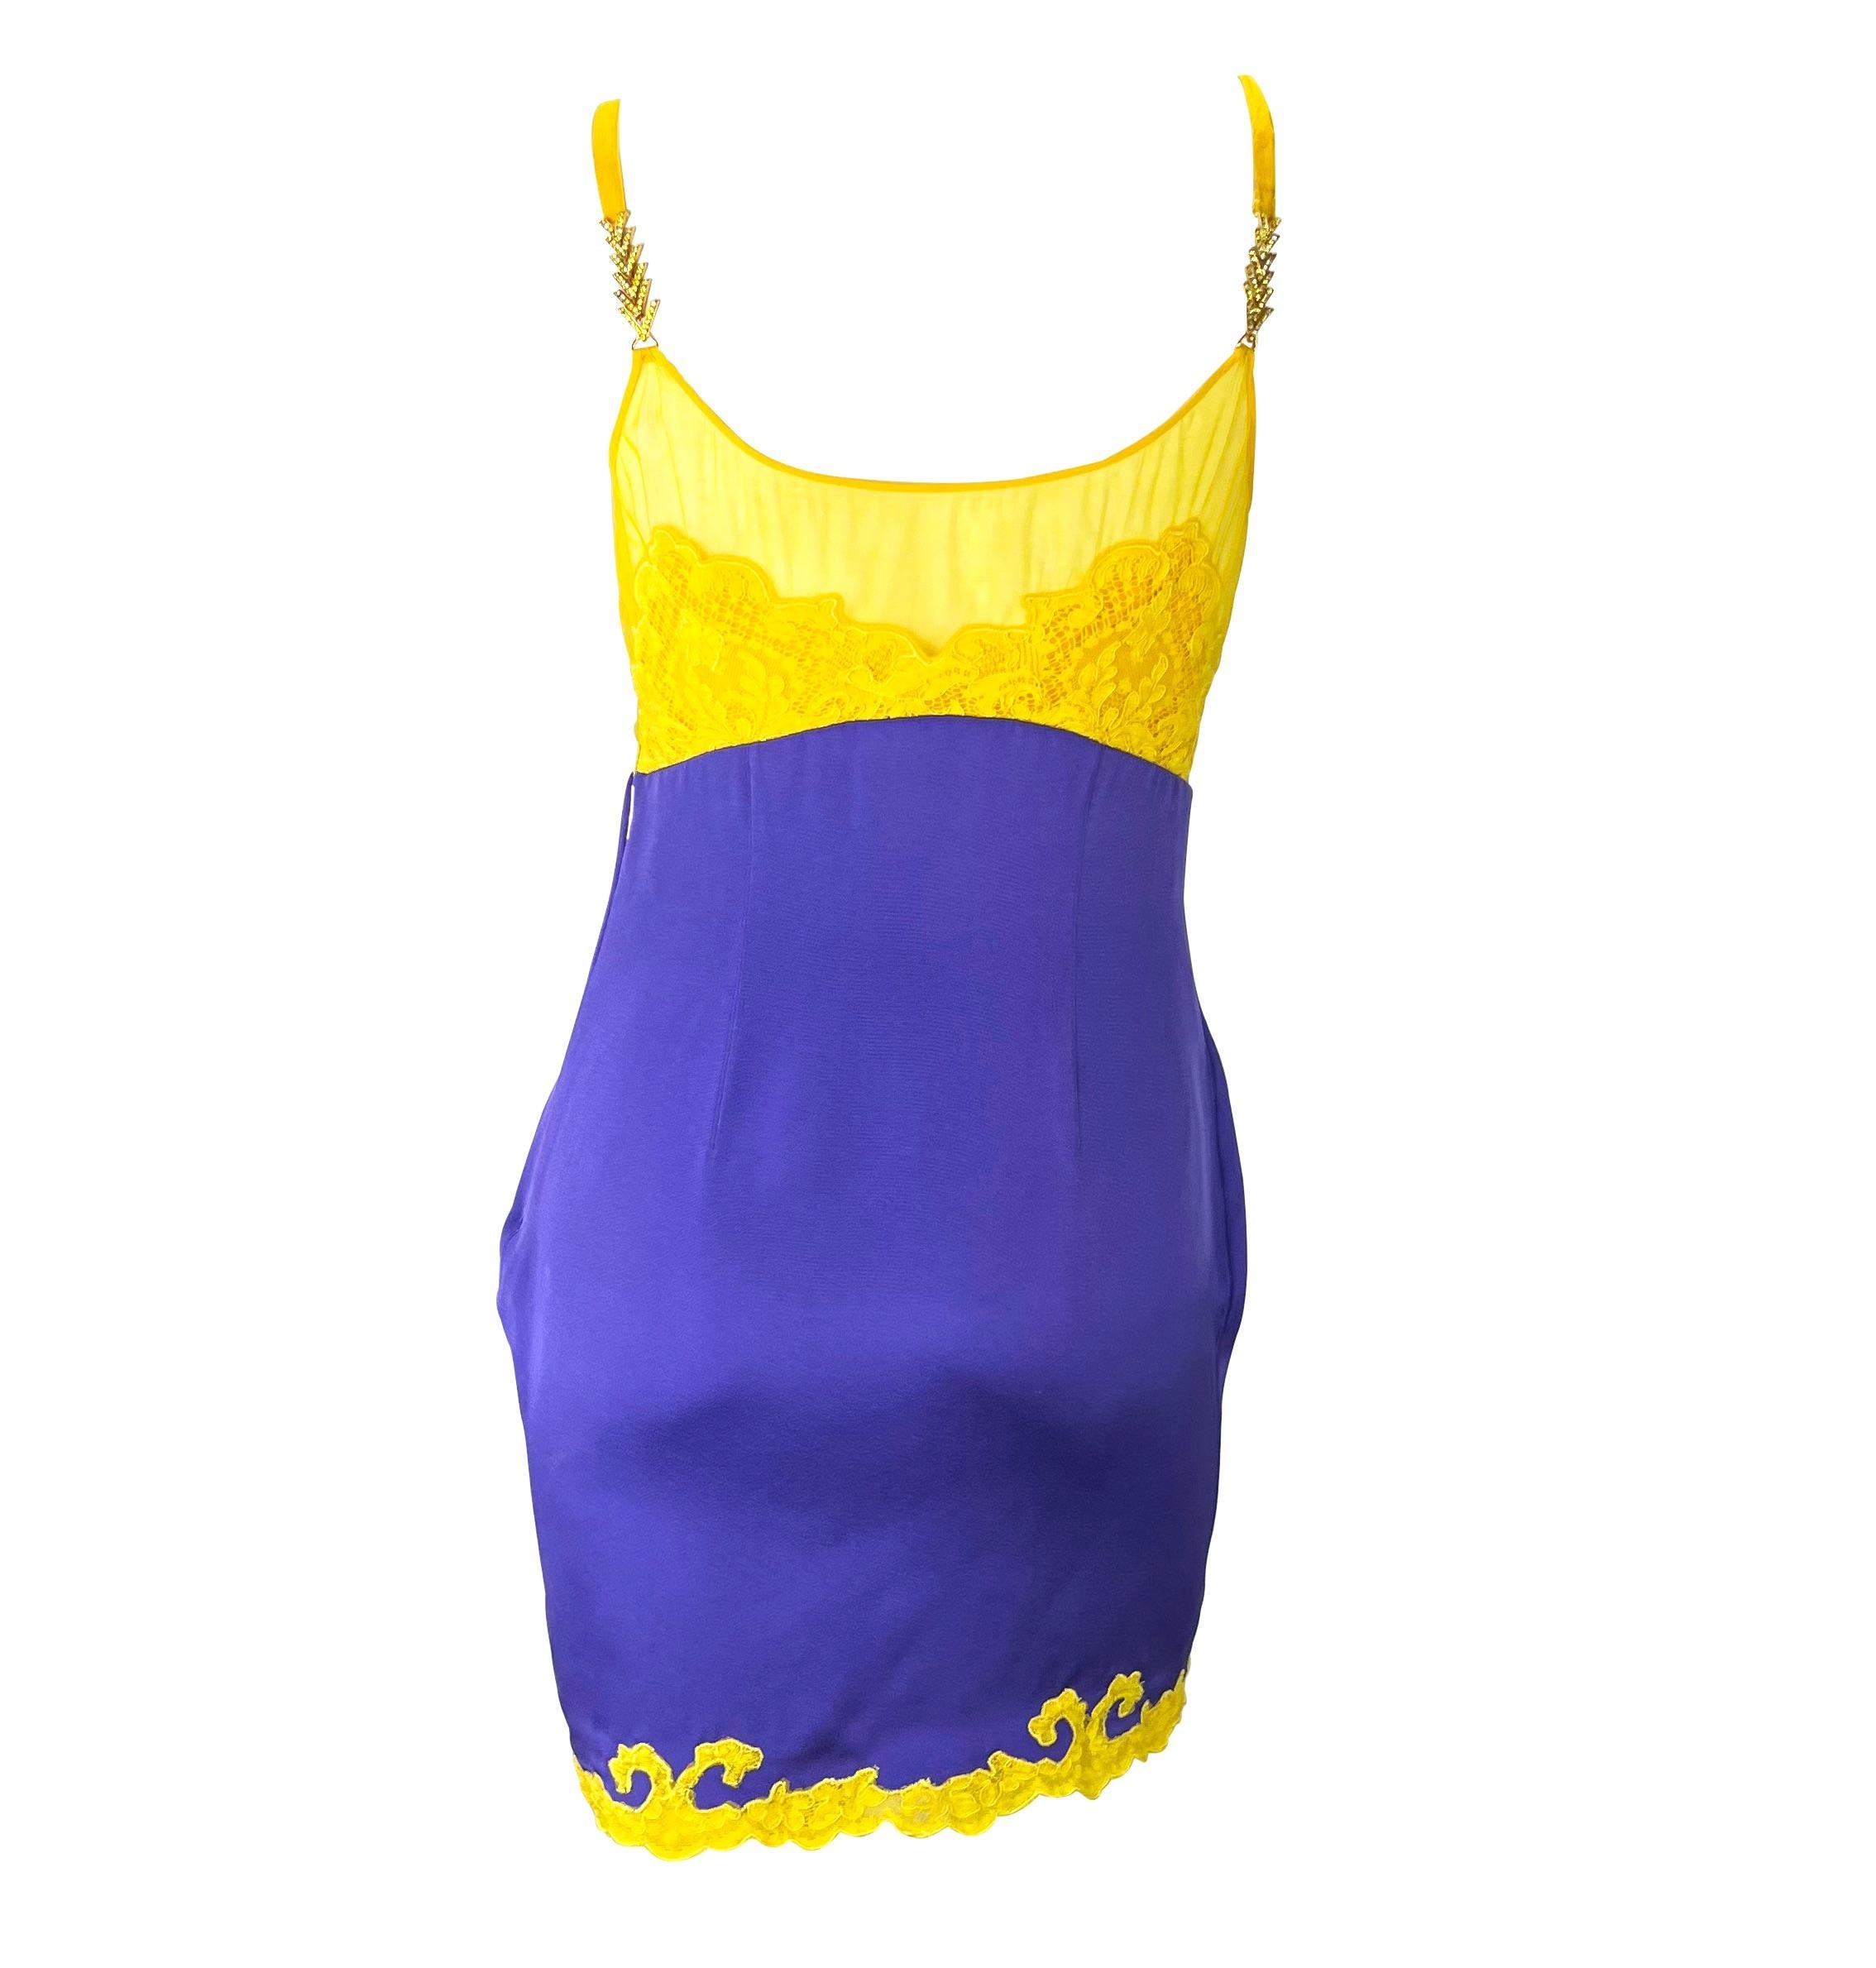 Women's F/W 1996 Gianni Versace Couture Purple Satin Yellow Lace Rhinestone Slip Dress For Sale